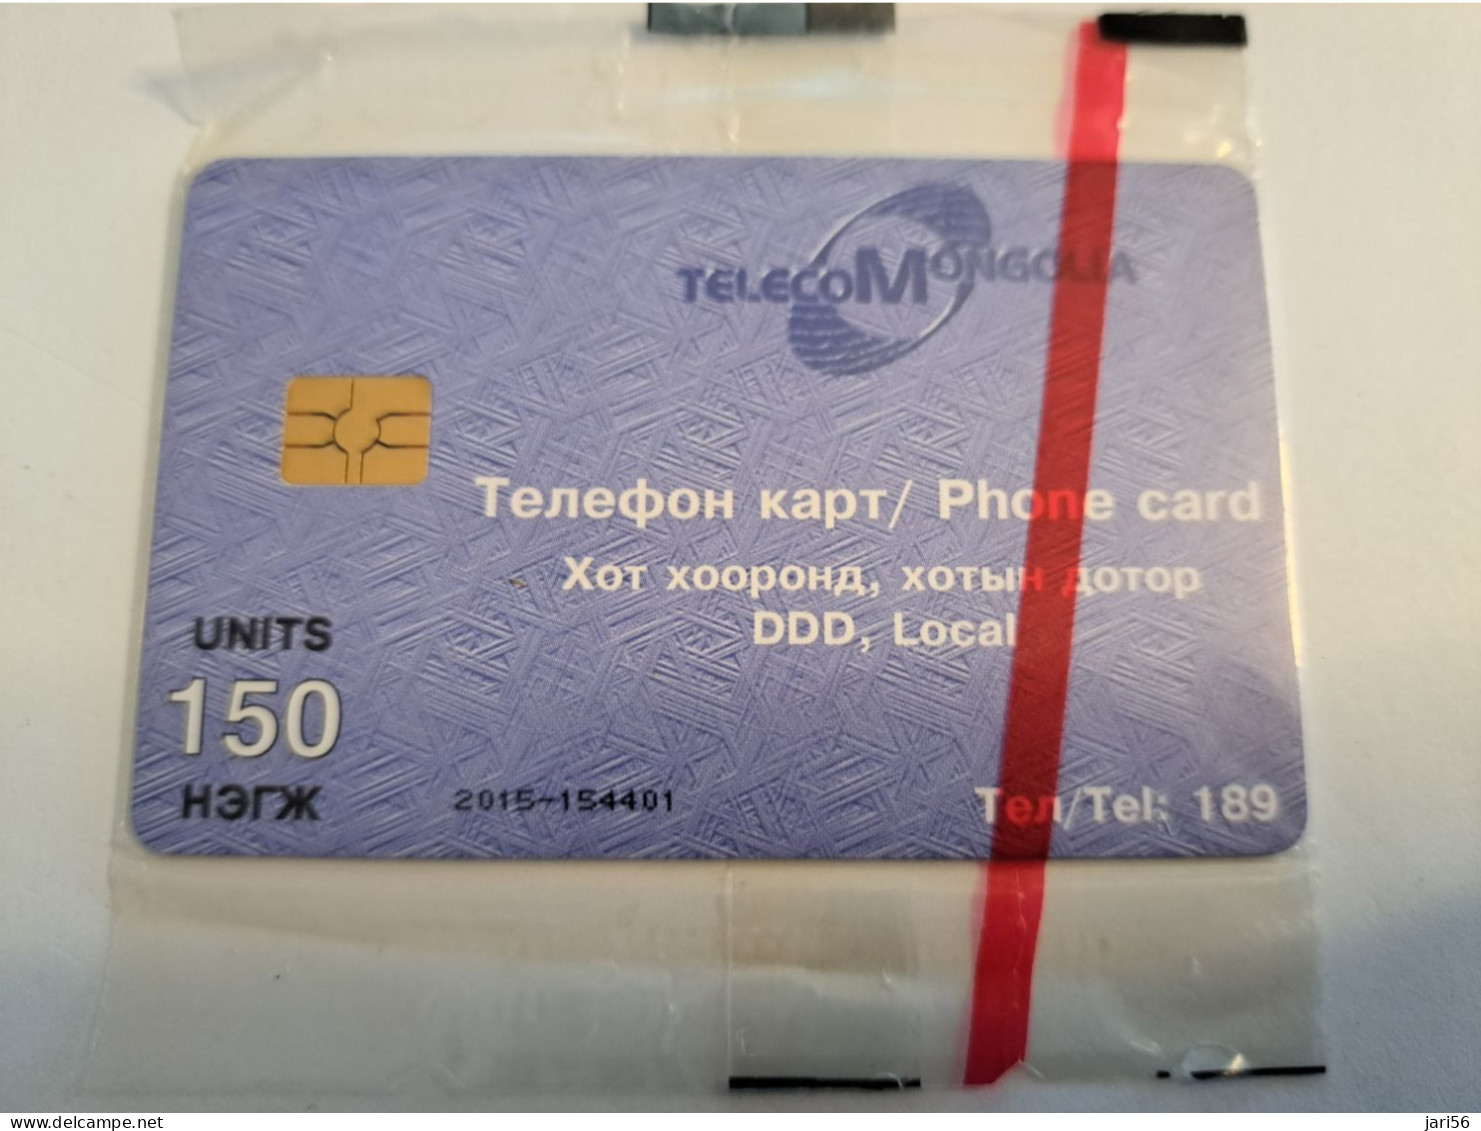 MONGOLIA  CHIPCARD / 150 UNITS / TELECO/MONGOLIA / MOUNTAIN/LAKE  MINT CARD / SEALED IN WRAPPER ** 16045 ** - Mongolei